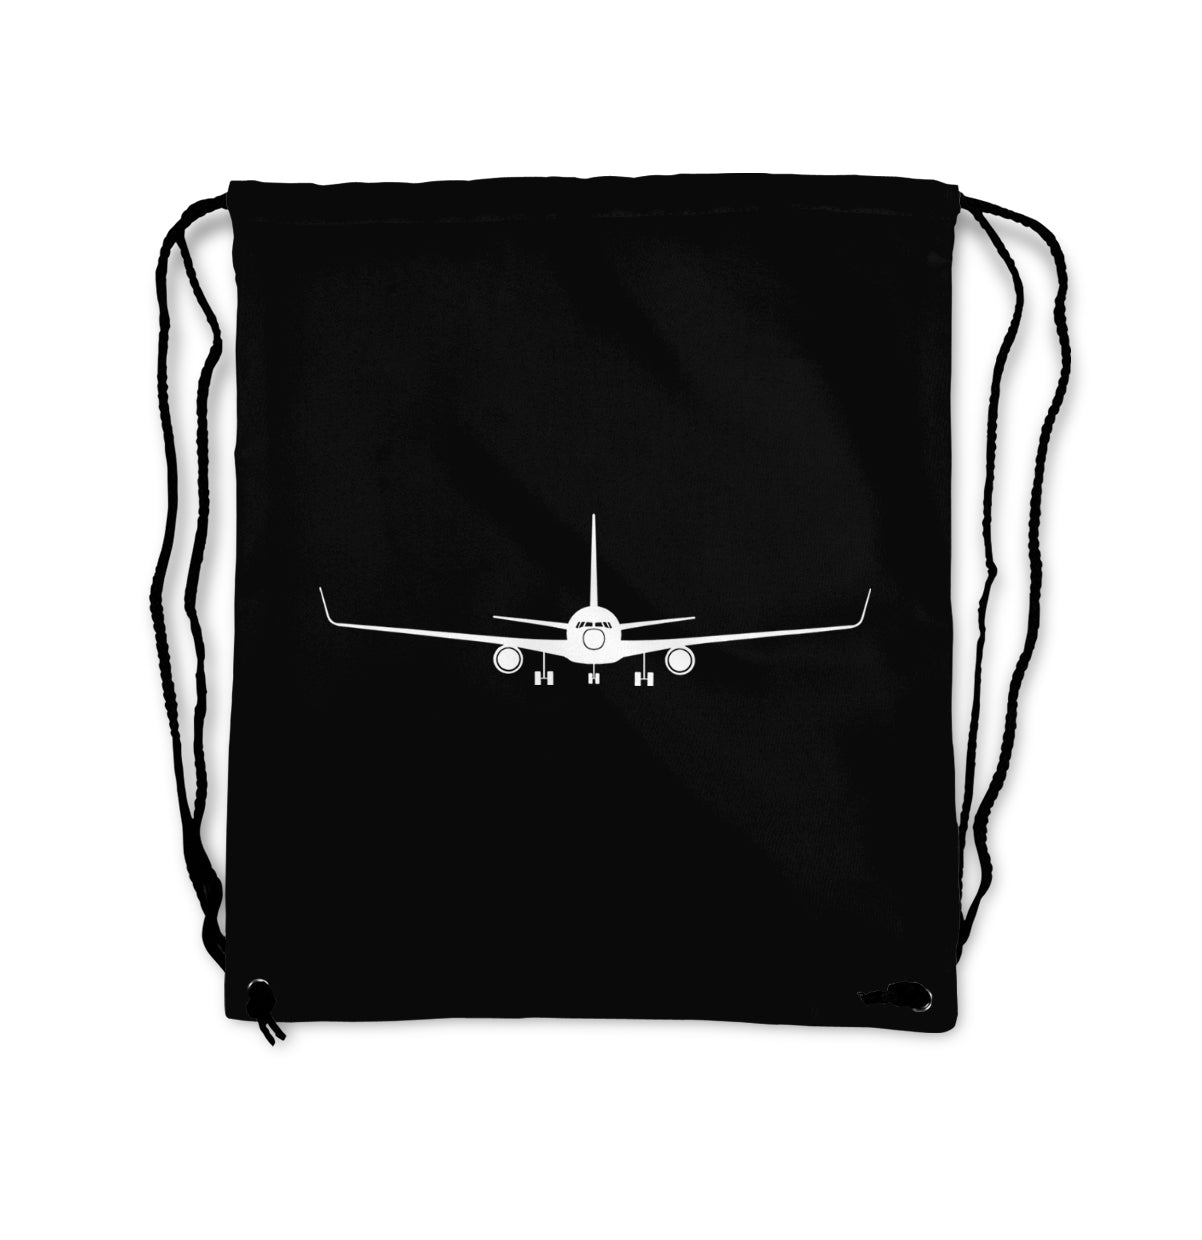 Boeing 767 Silhouette Designed Drawstring Bags